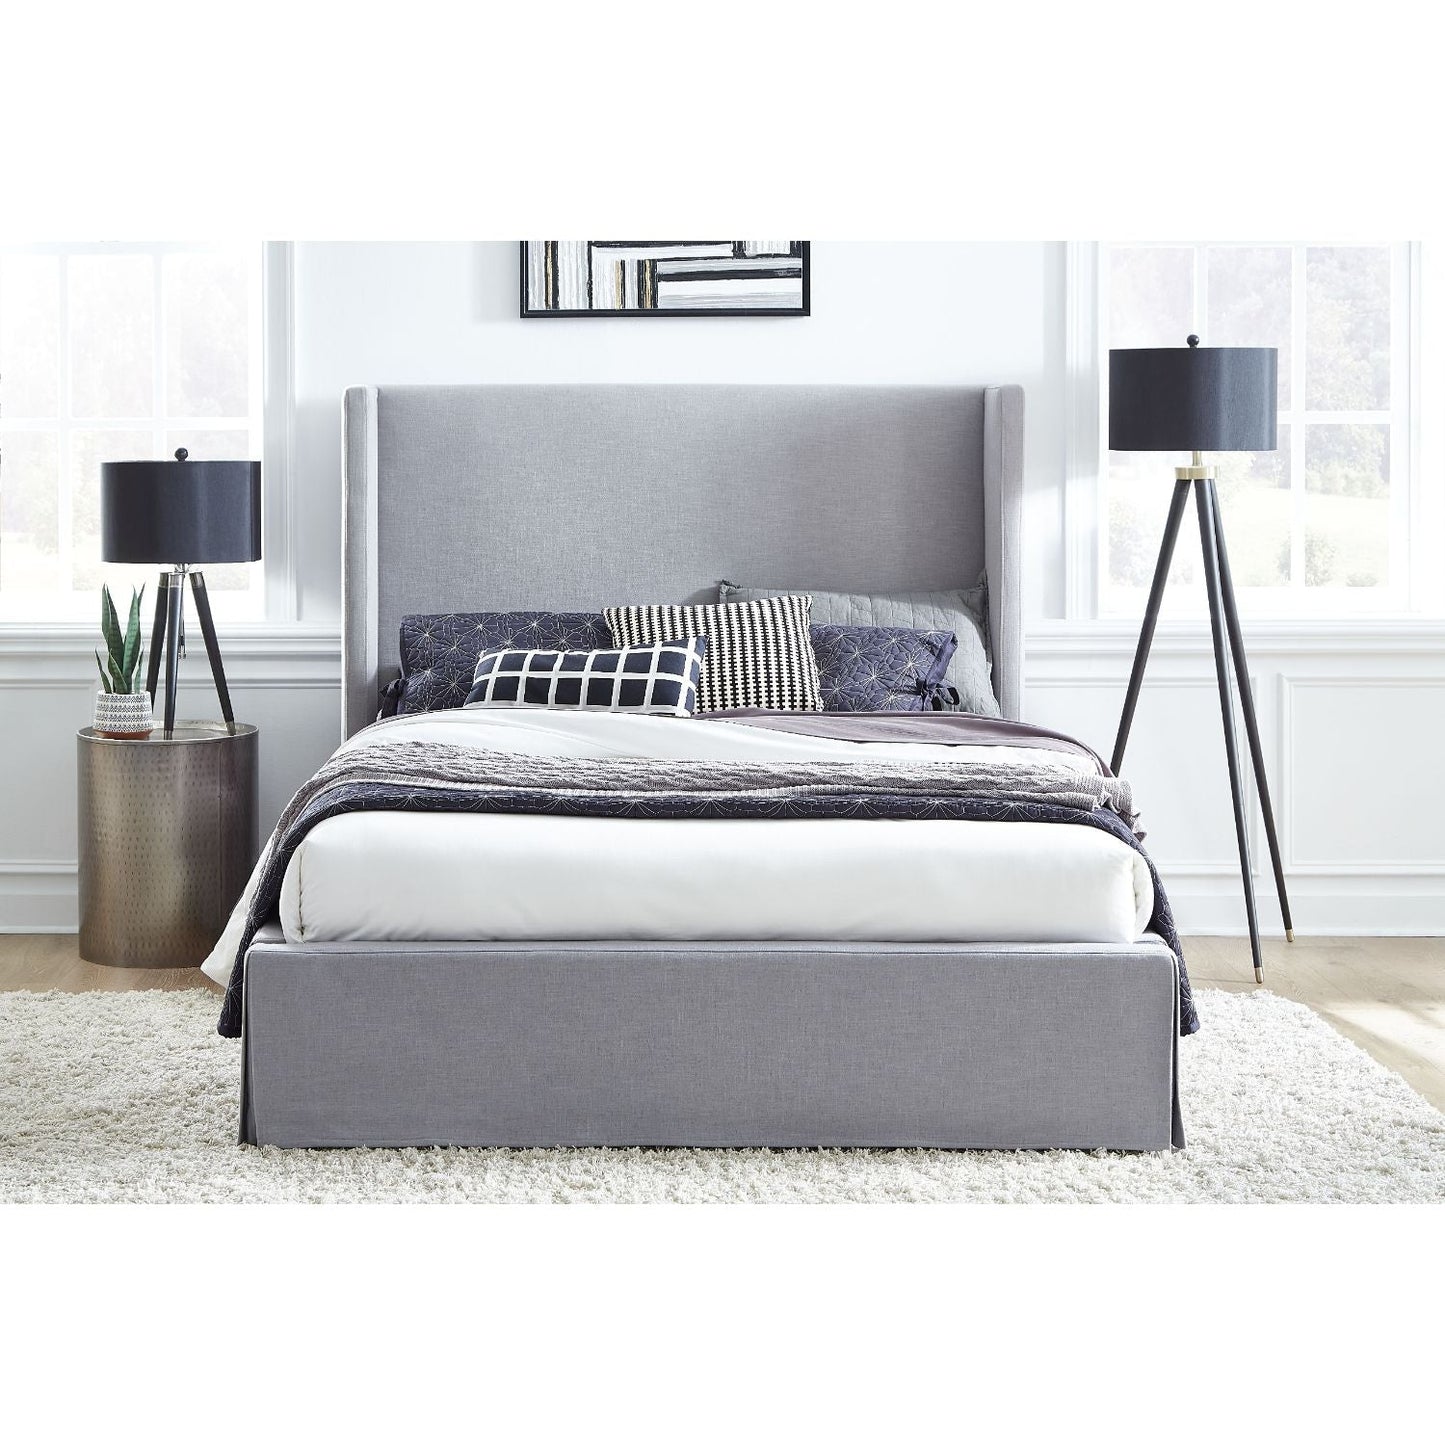 Modus Cresta Queen Upholstered Skirted Panel Bed in Fog